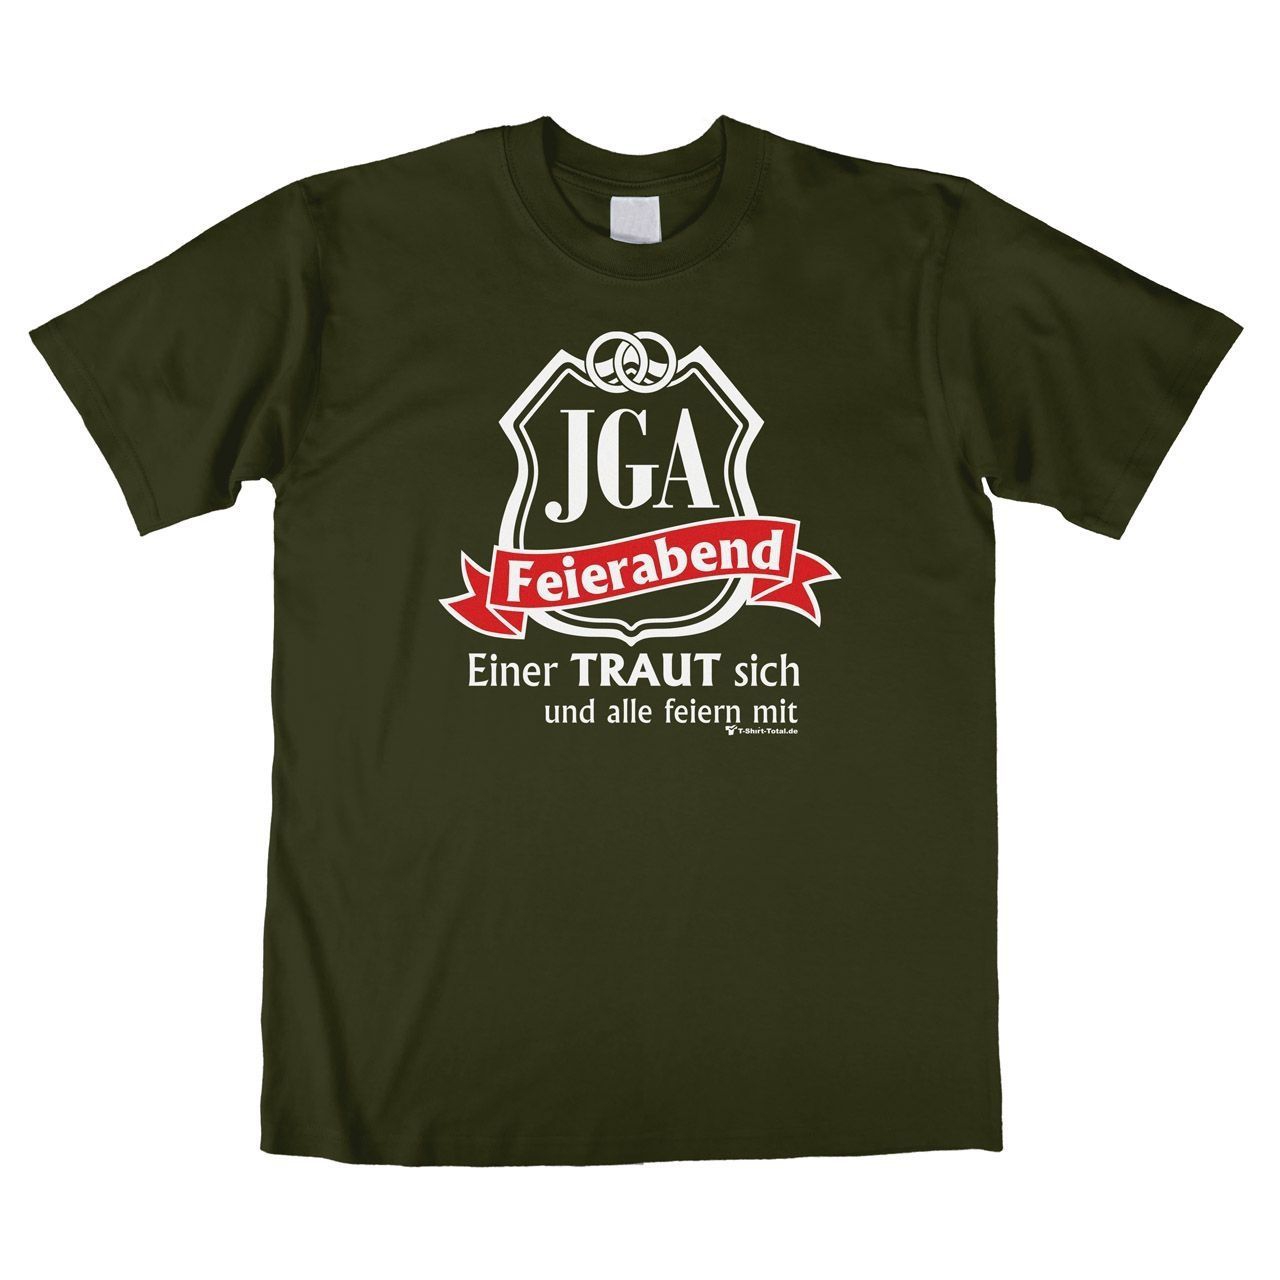 JGA Feierabend Unisex T-Shirt khaki Medium